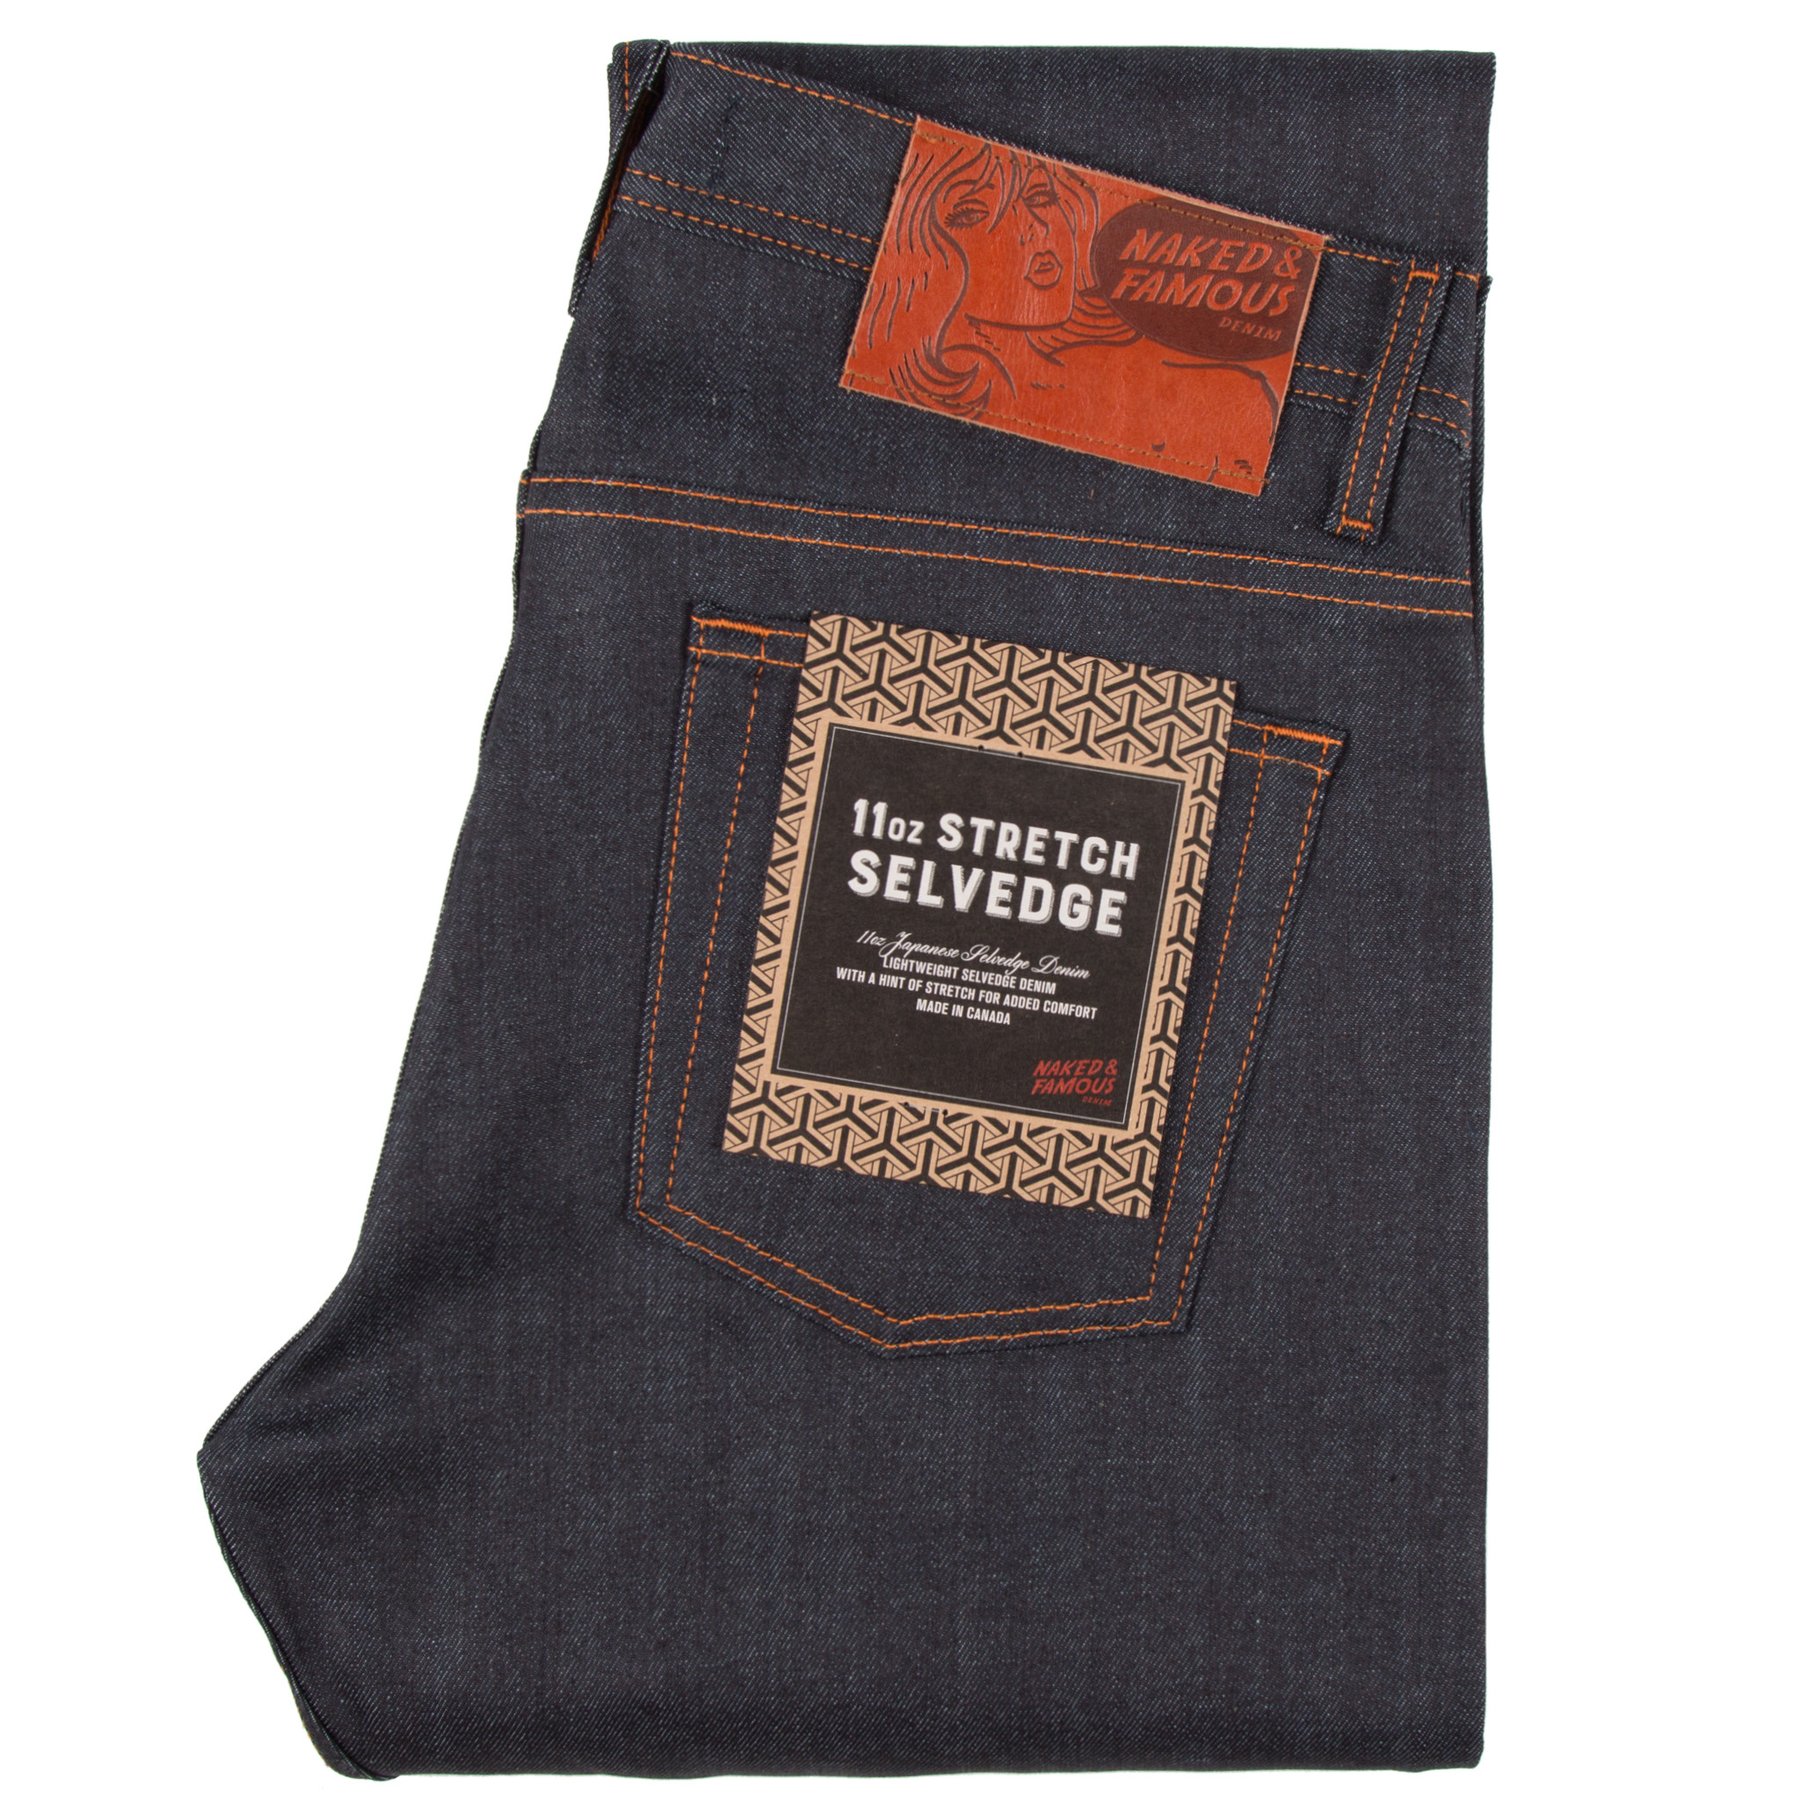  11oz Stretch Selvedge Jeans Folded 